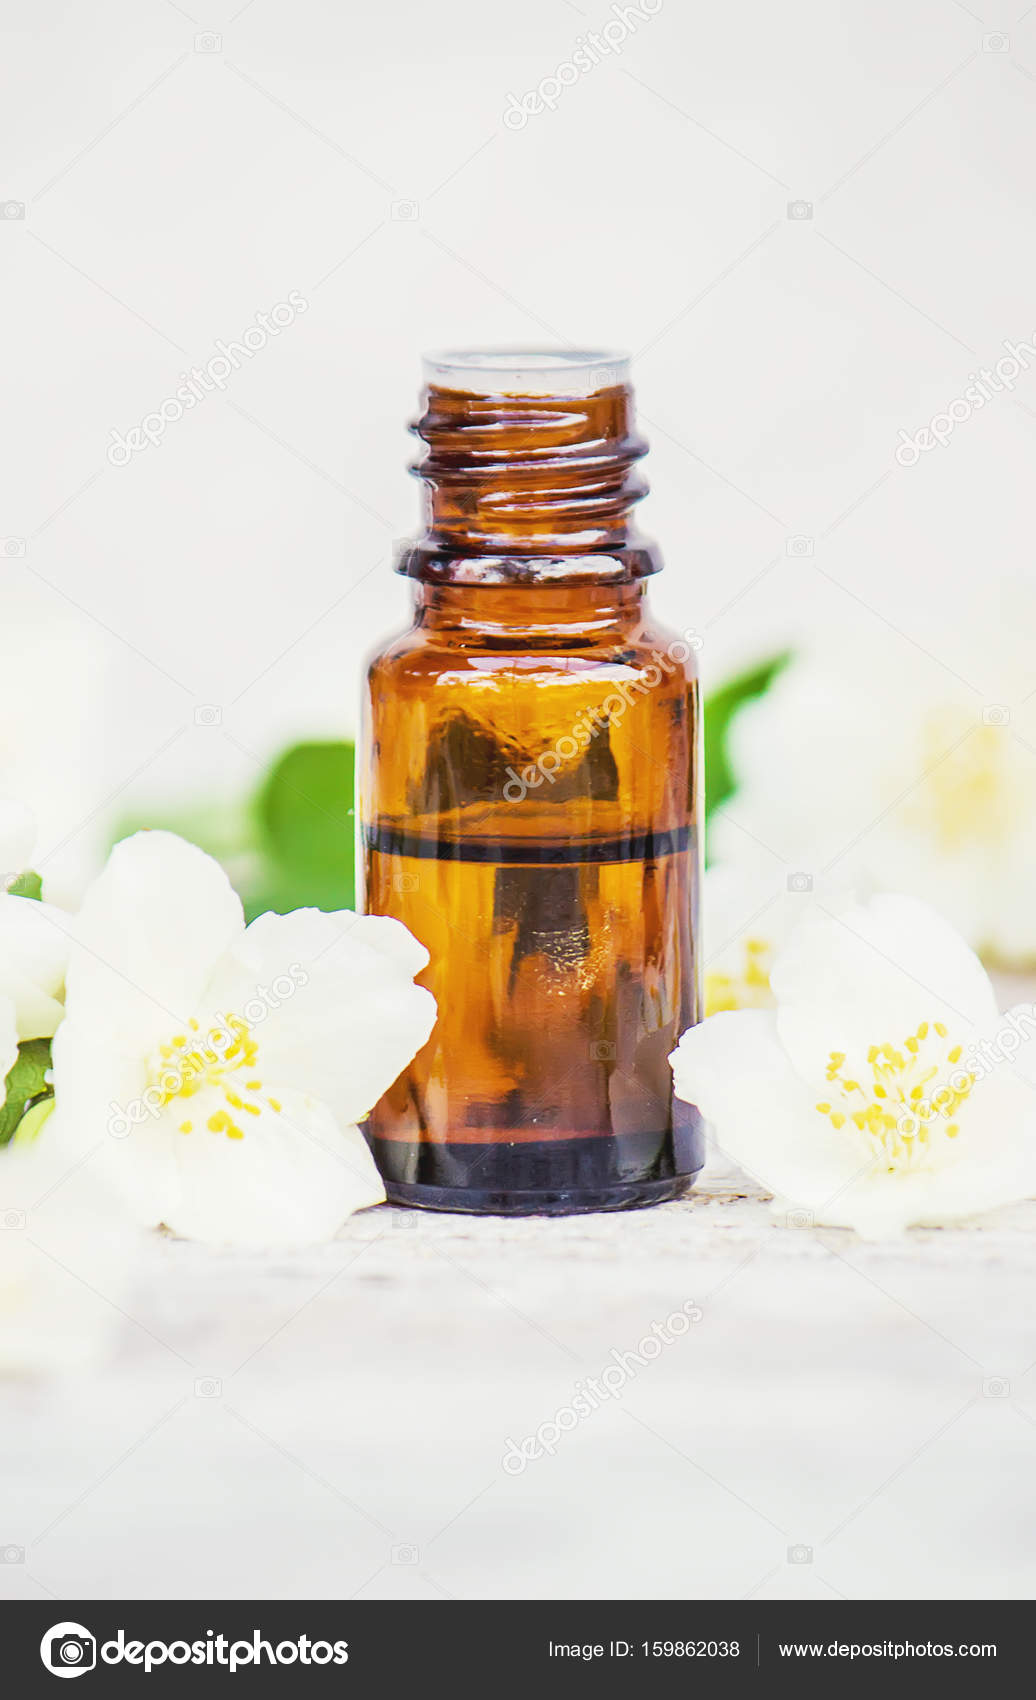 Jasmine essential oil. selective focus. Stock Photo by  ©yana-komisarenko@yandex.ru 159862038